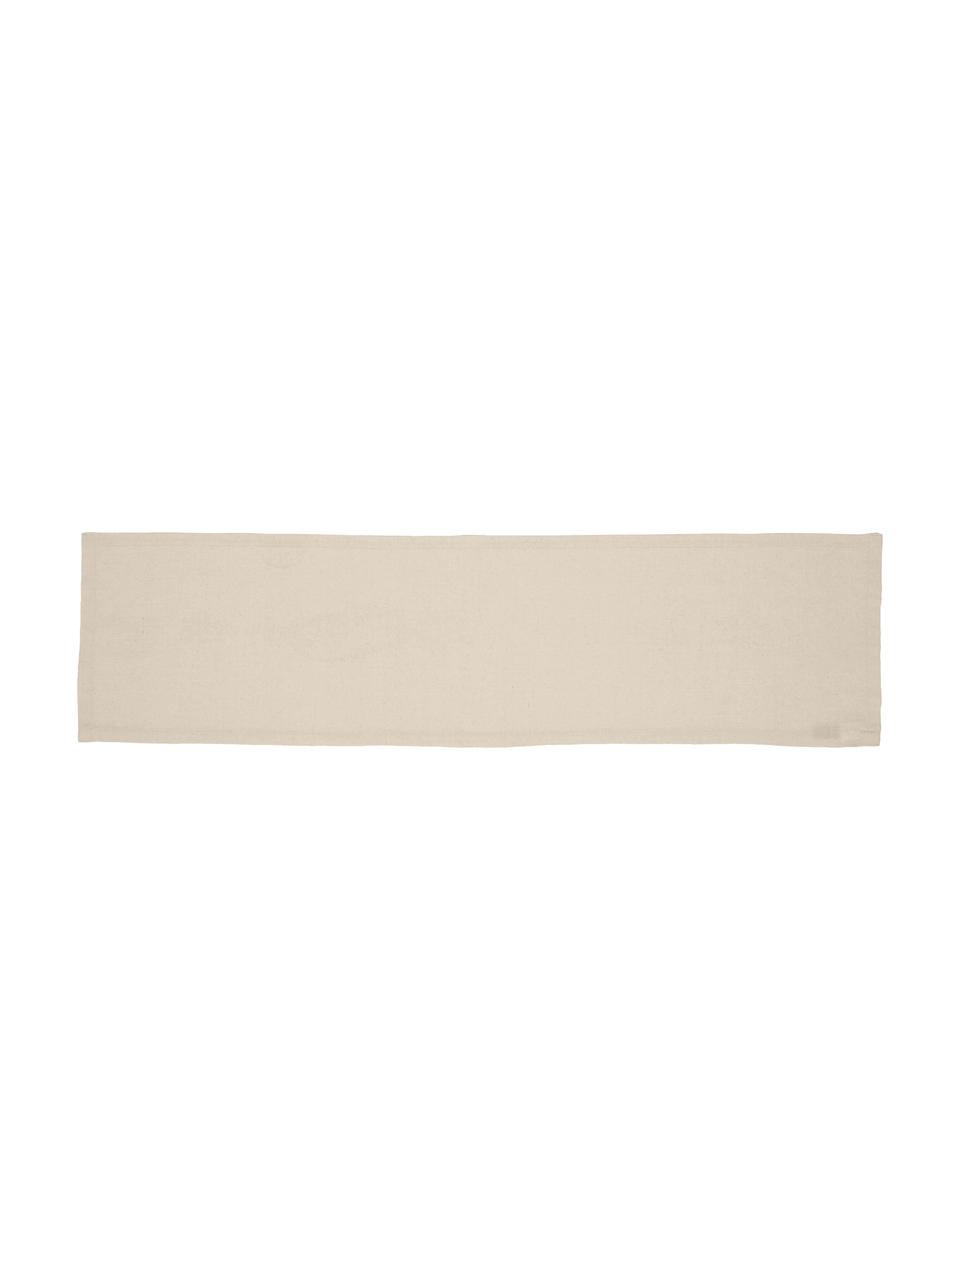 Chemin de table beige Riva, 55 % coton, 45 % polyester, Beige, larg. 40 x long. 150 cm